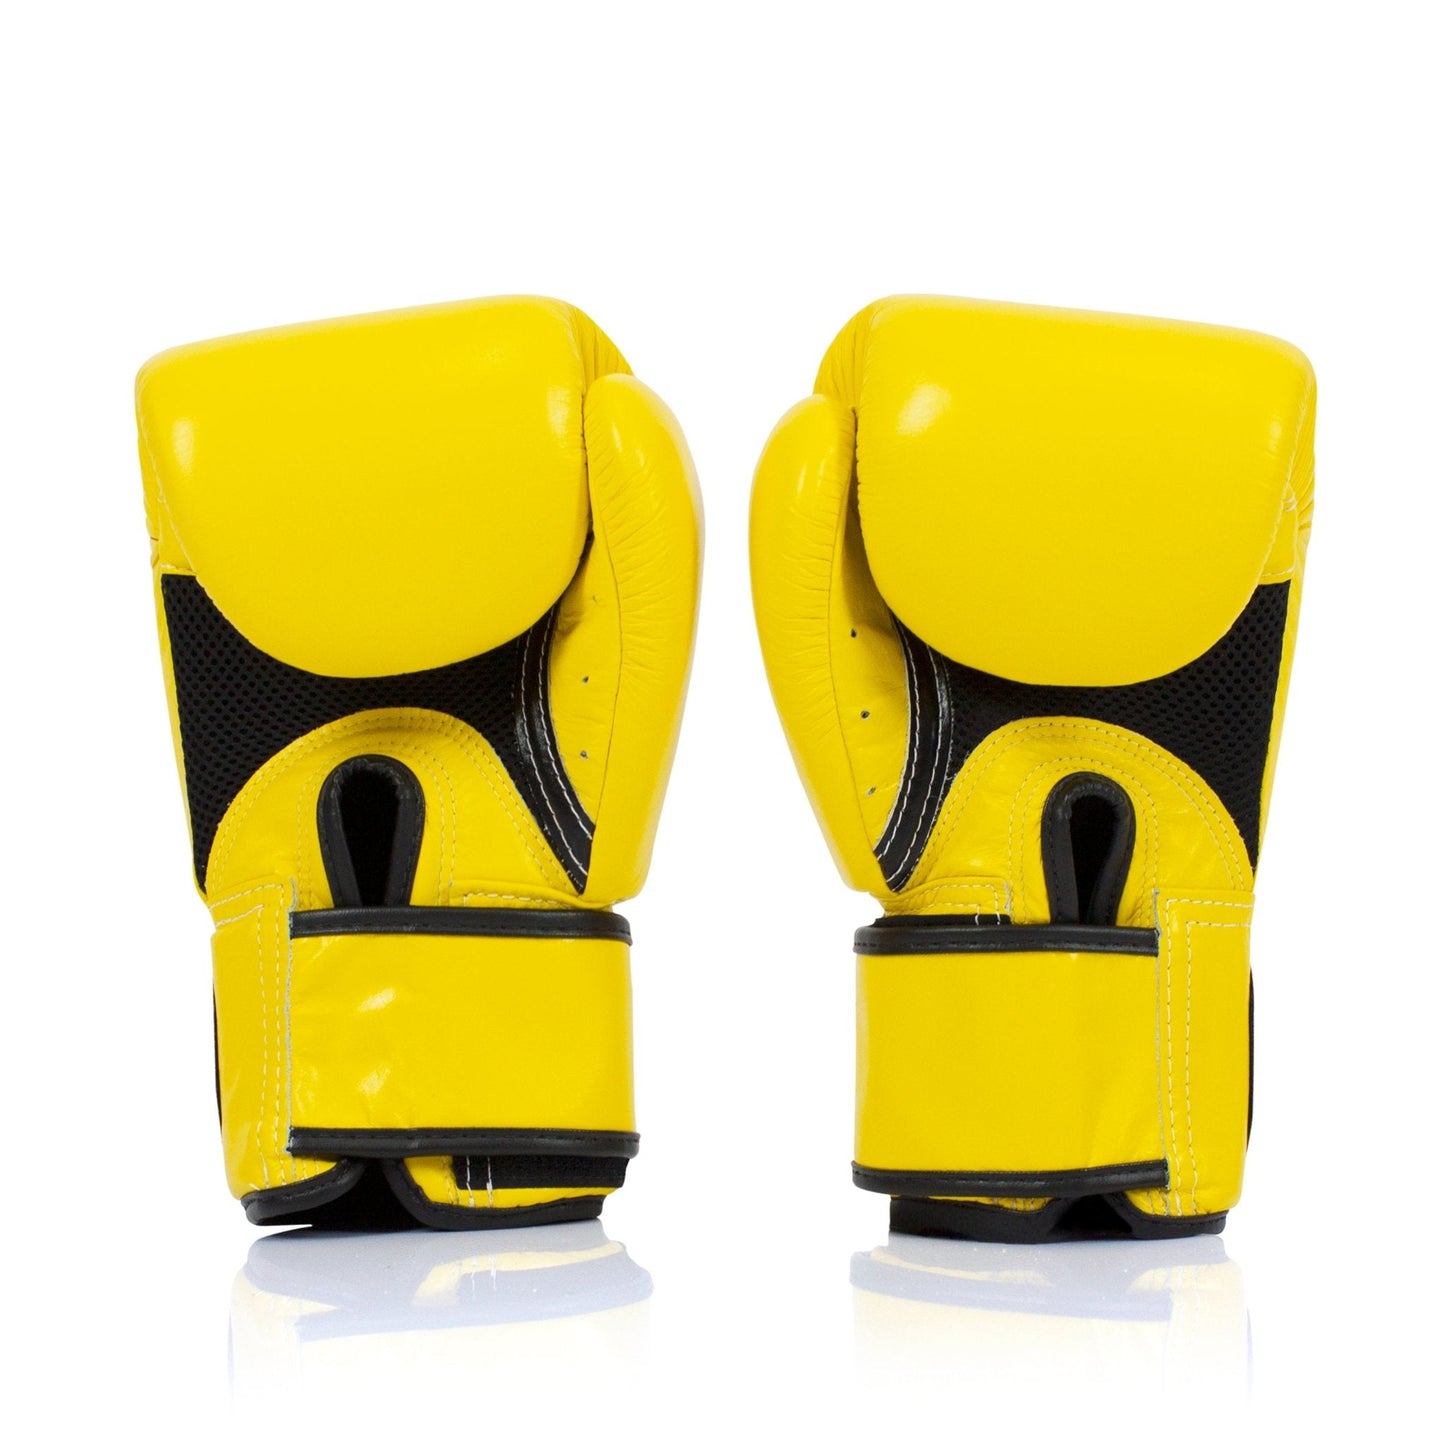 Fairtex Boxing Gloves BGV1 "Breathable" Yellow - SUPER EXPORT SHOP